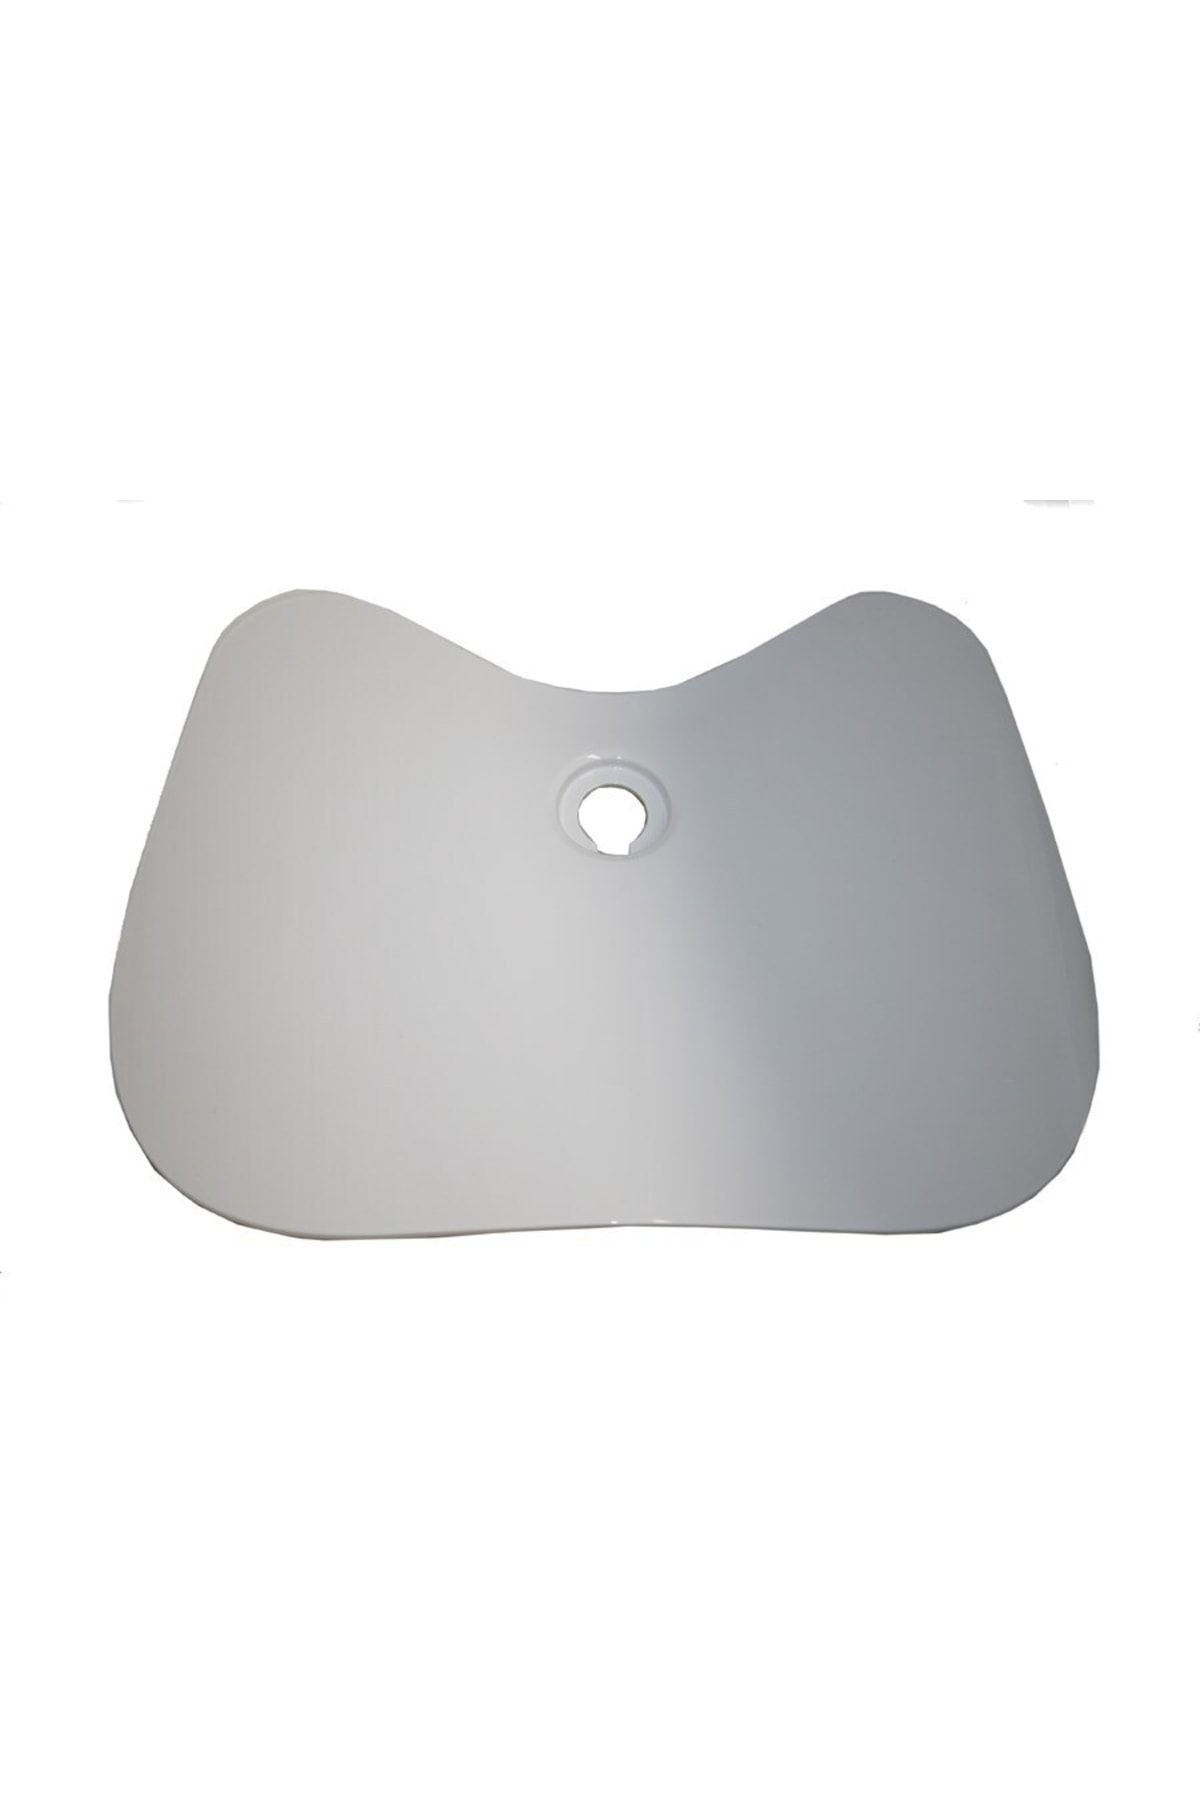 Mondial Ön Iç Panel Torpido Kapağı Beyaz Gomax 150 Orijinal